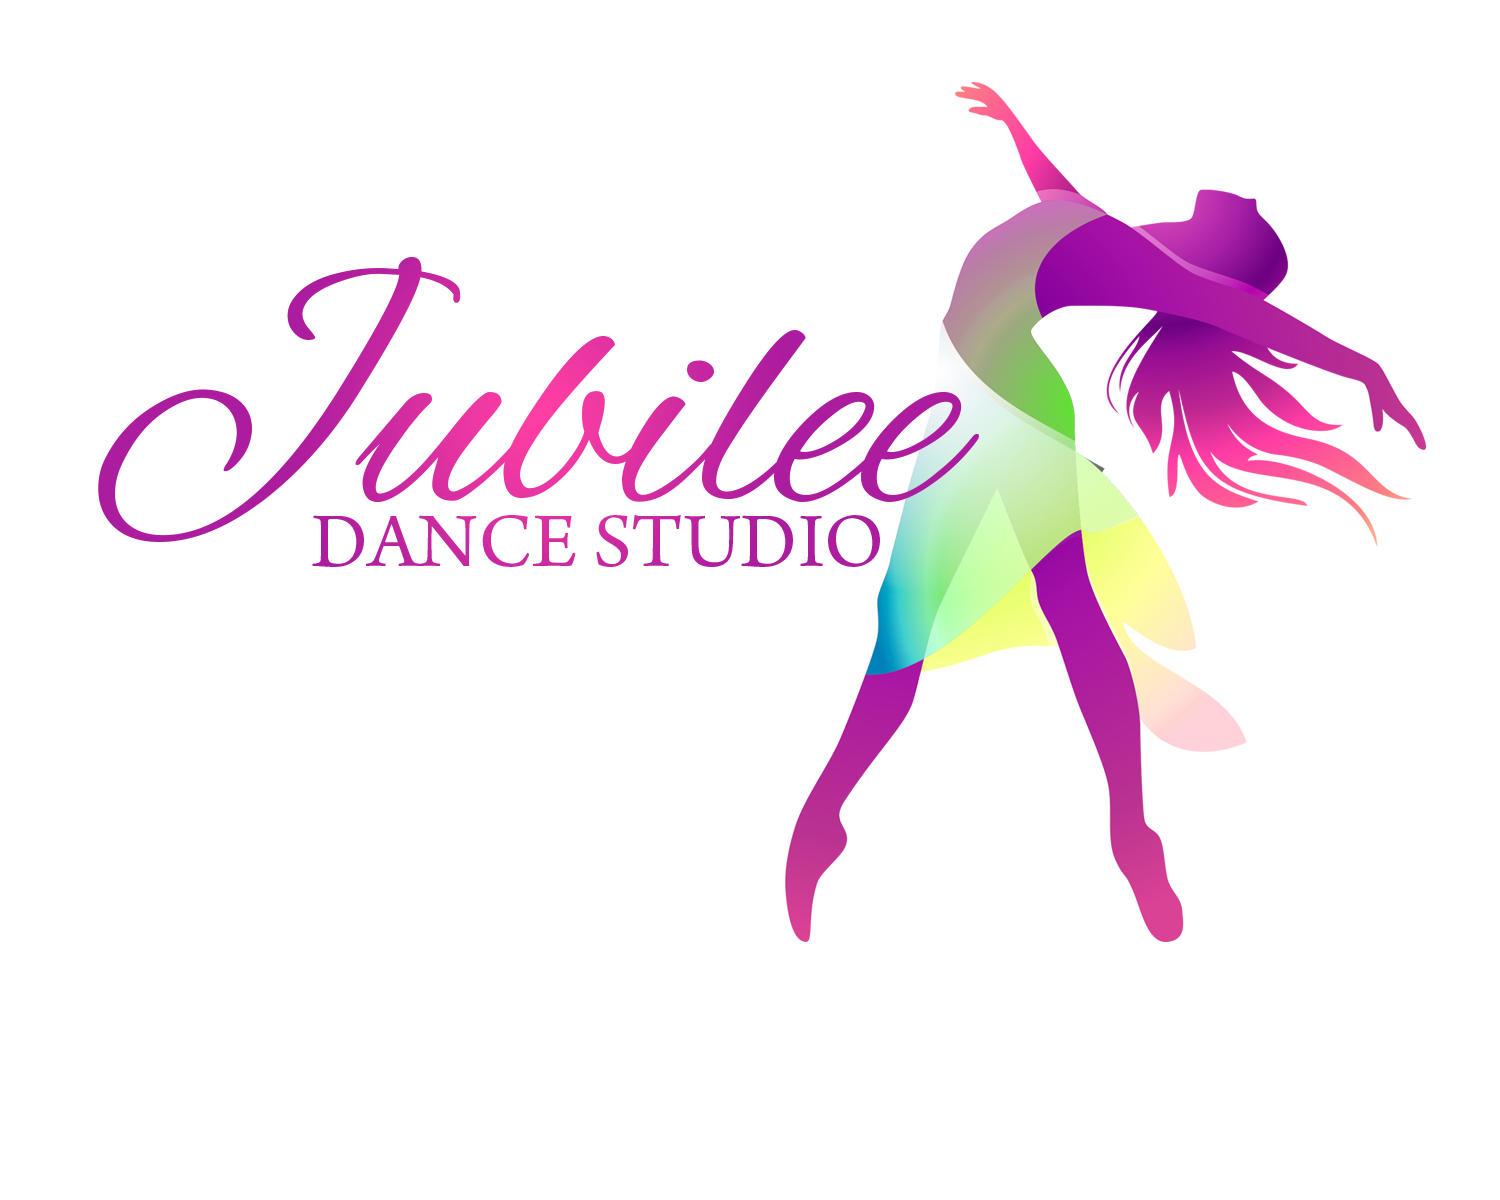 Школа танцев текст. Студия танца логотип. Логотип танцевальной студии. Логотип танцевального коллектива. Логотип танцевальной школы.